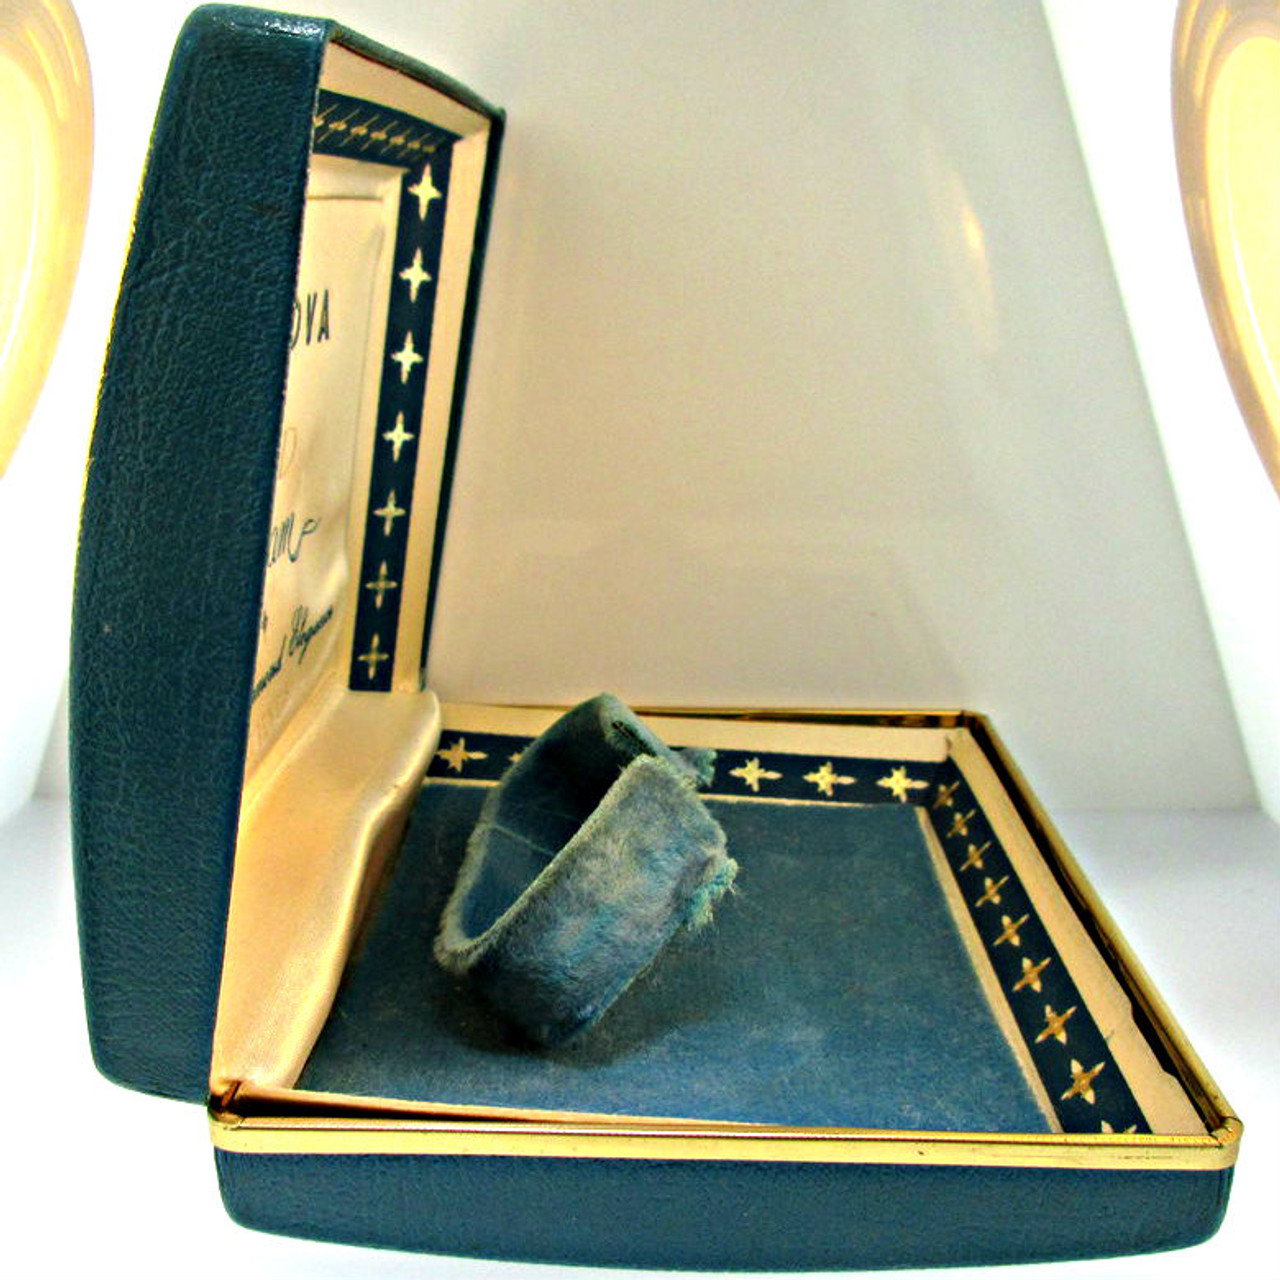 Vintage Bulova Diamond Dream New Diamond Elegance Watch Box